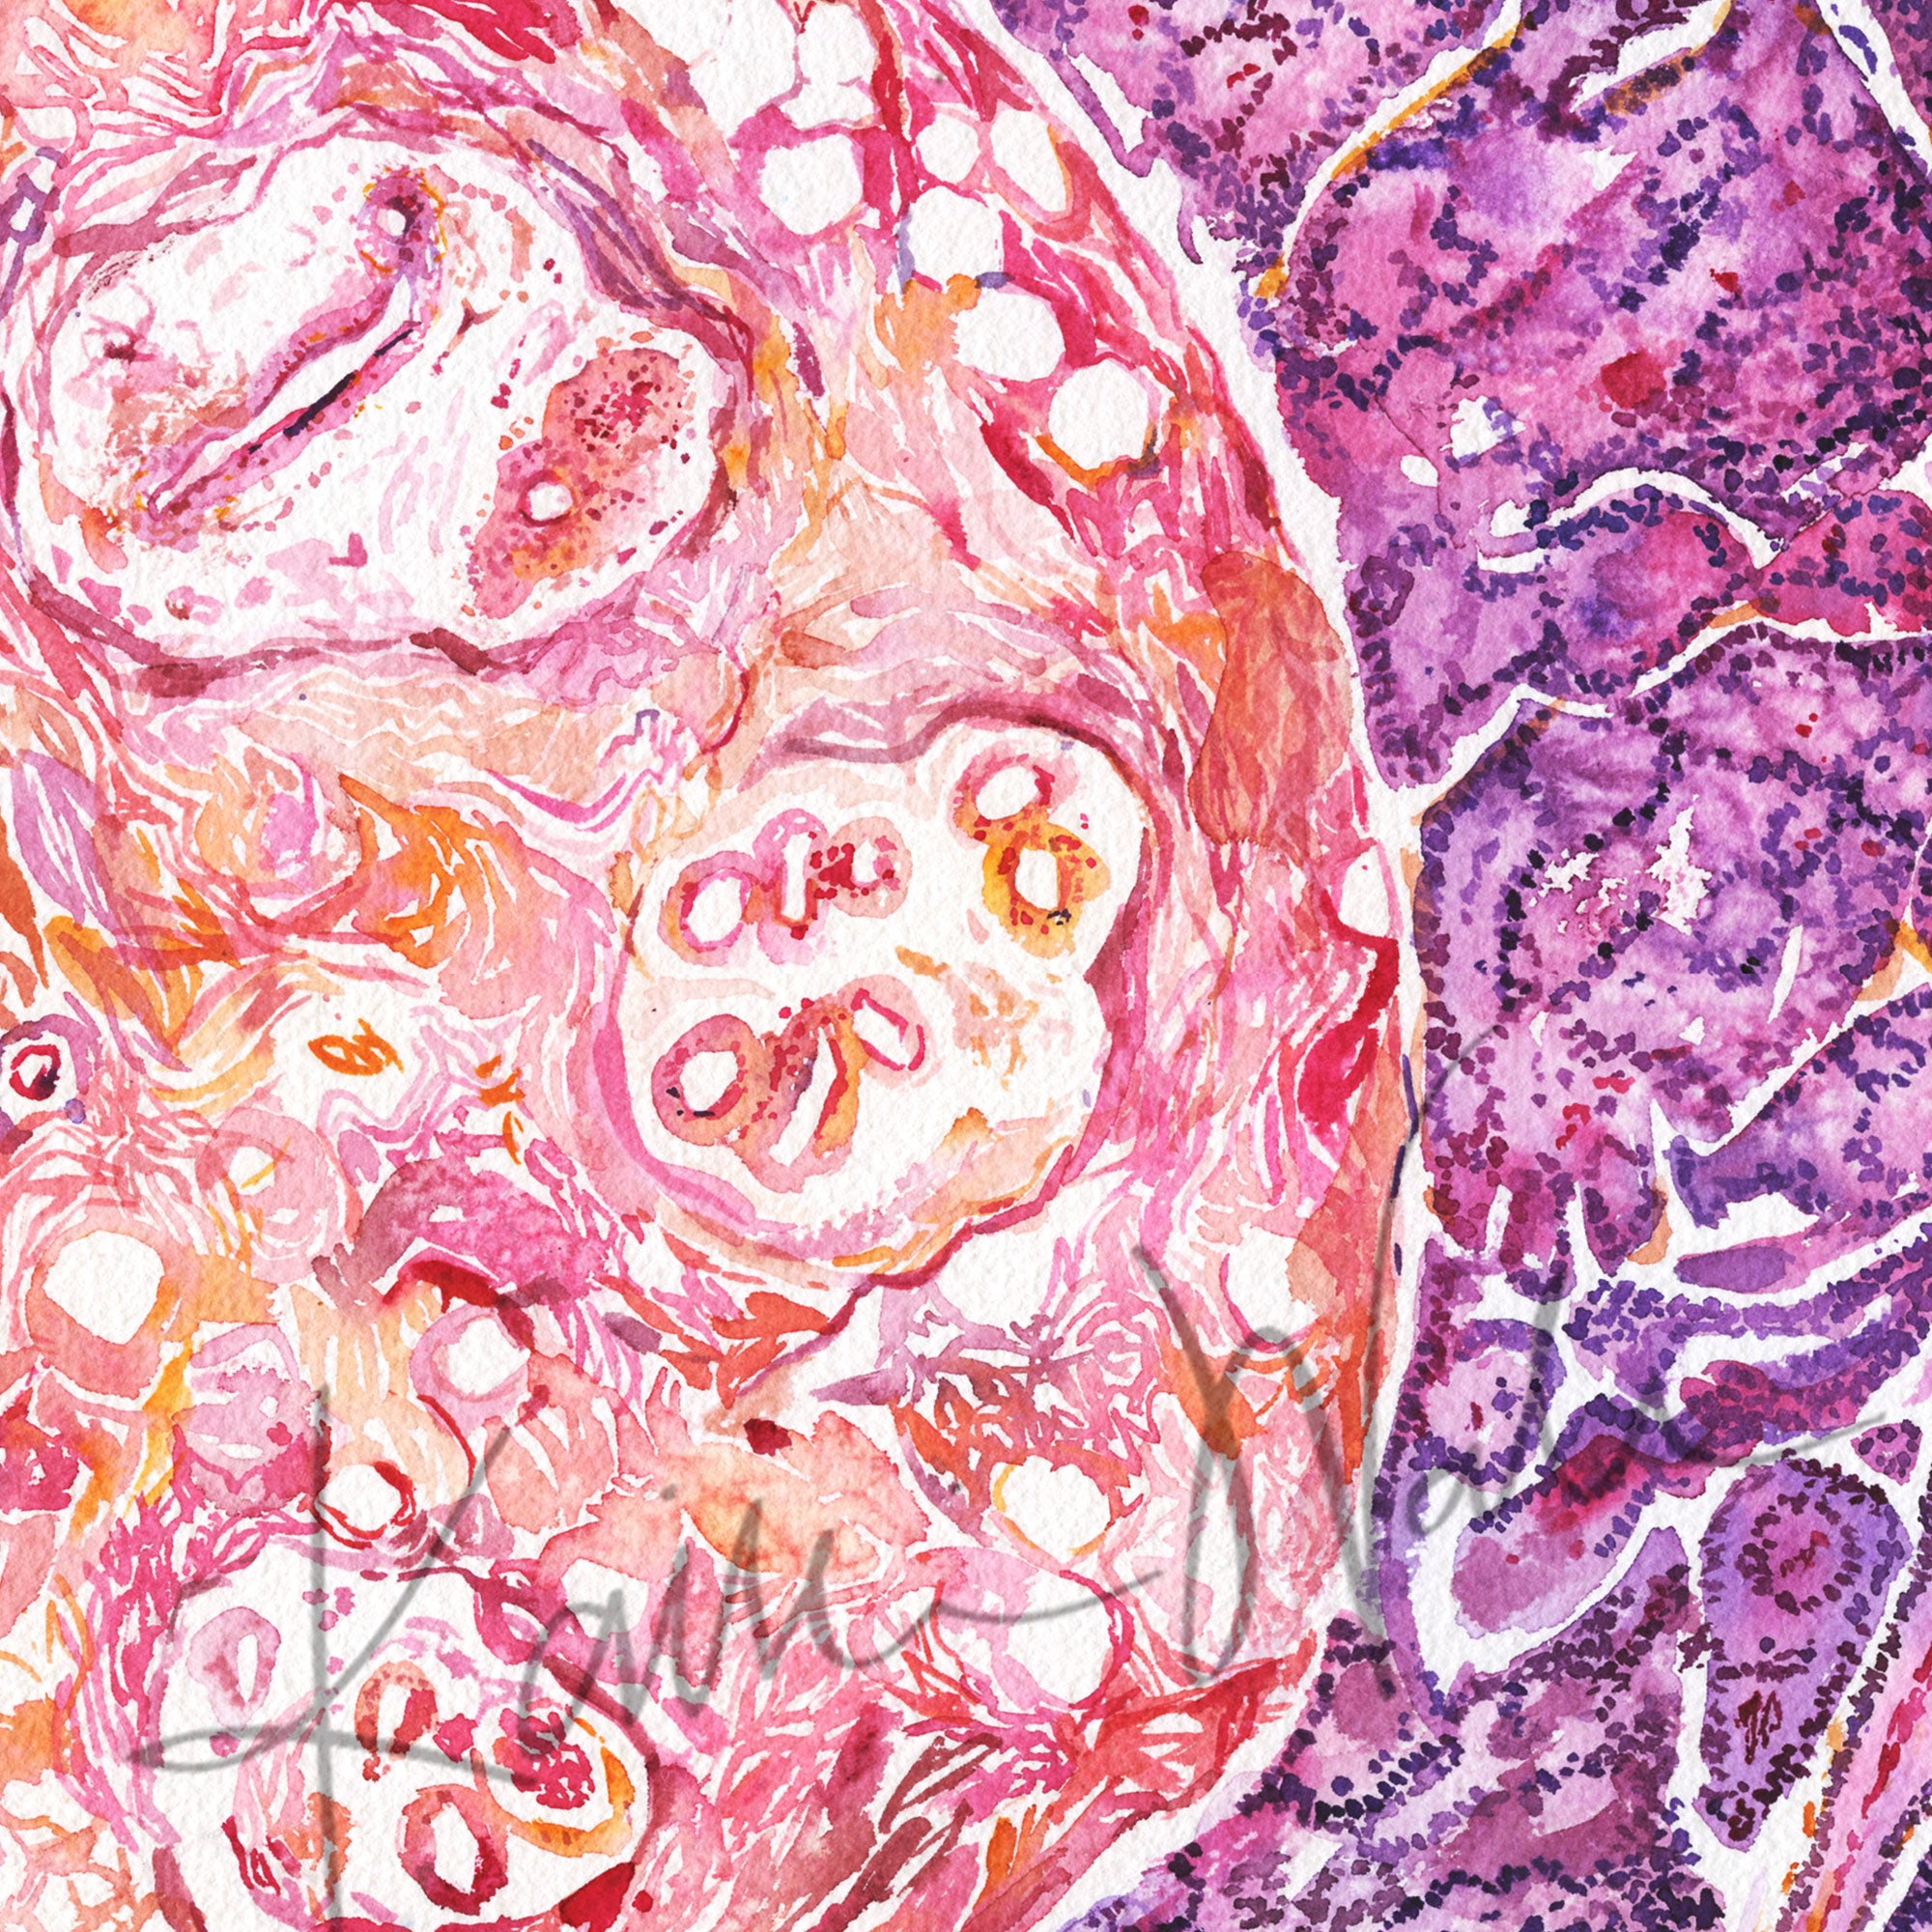 Breast Histology Watercolor Print